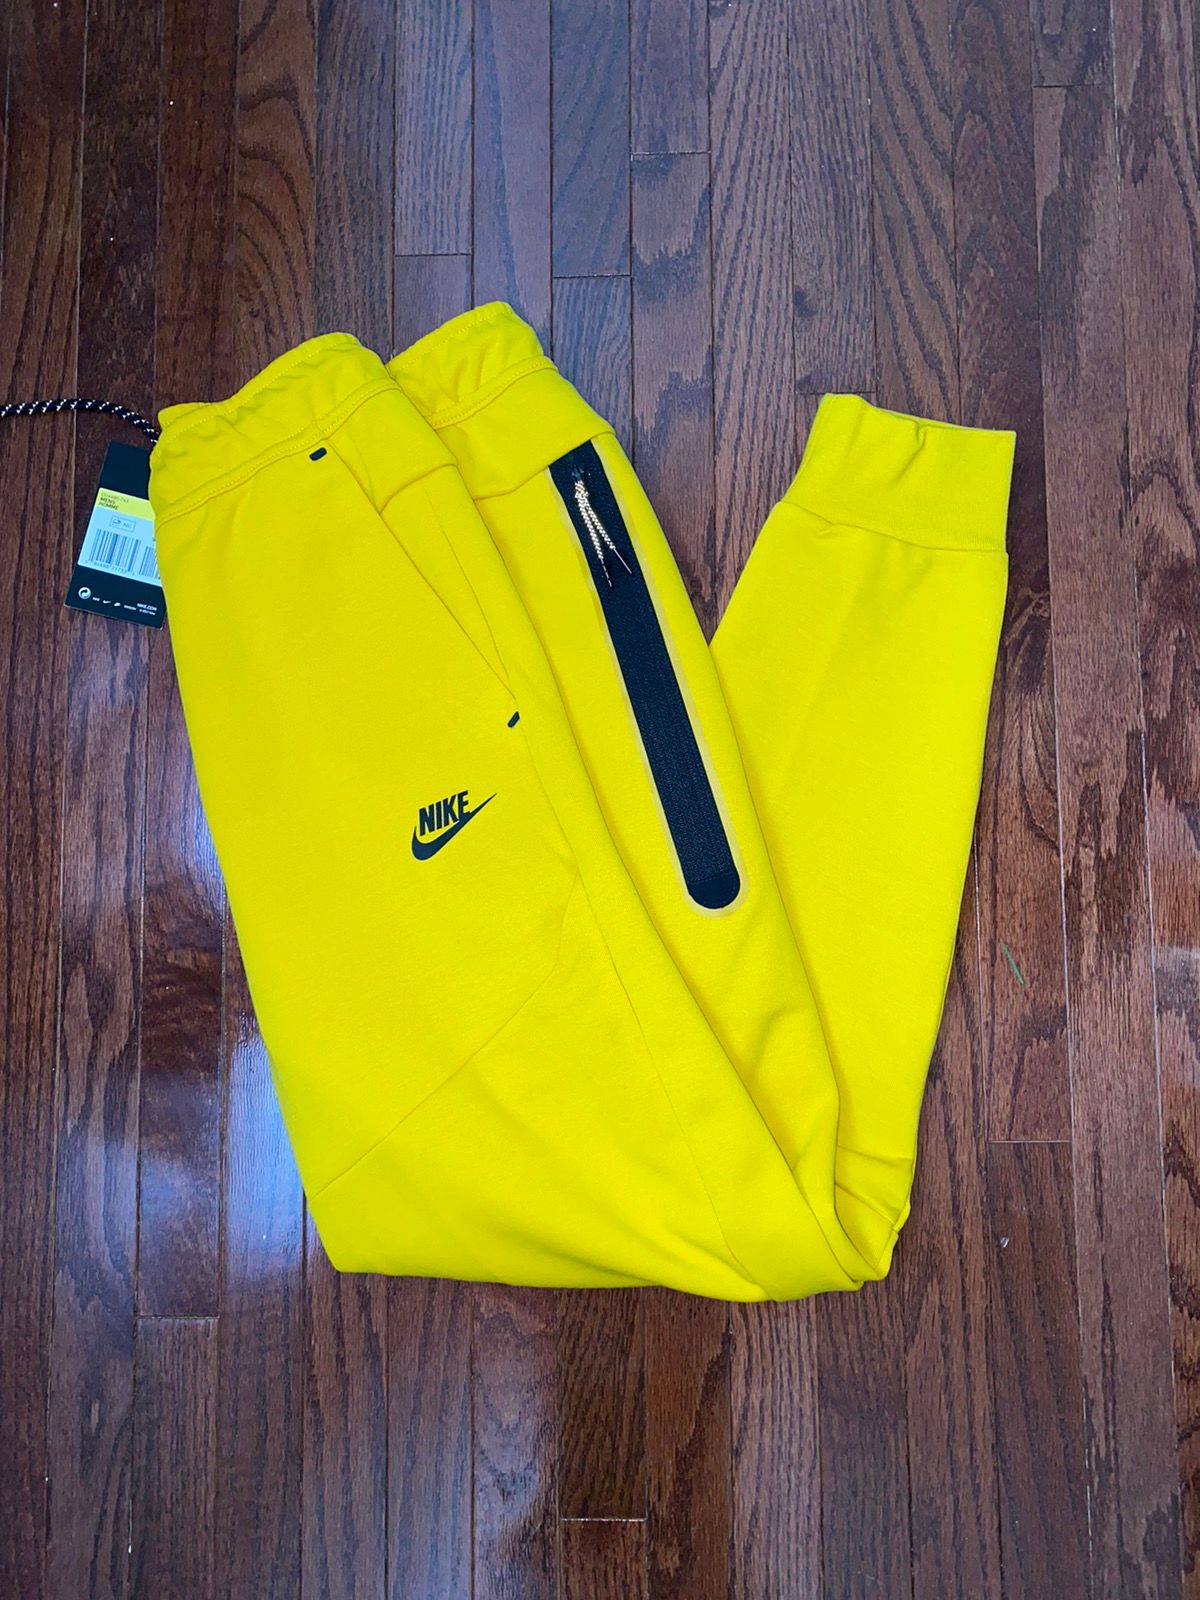 Nike New Nike Tech Fleece Pants Yellow Size US 30 / EU 46 - 1 Preview